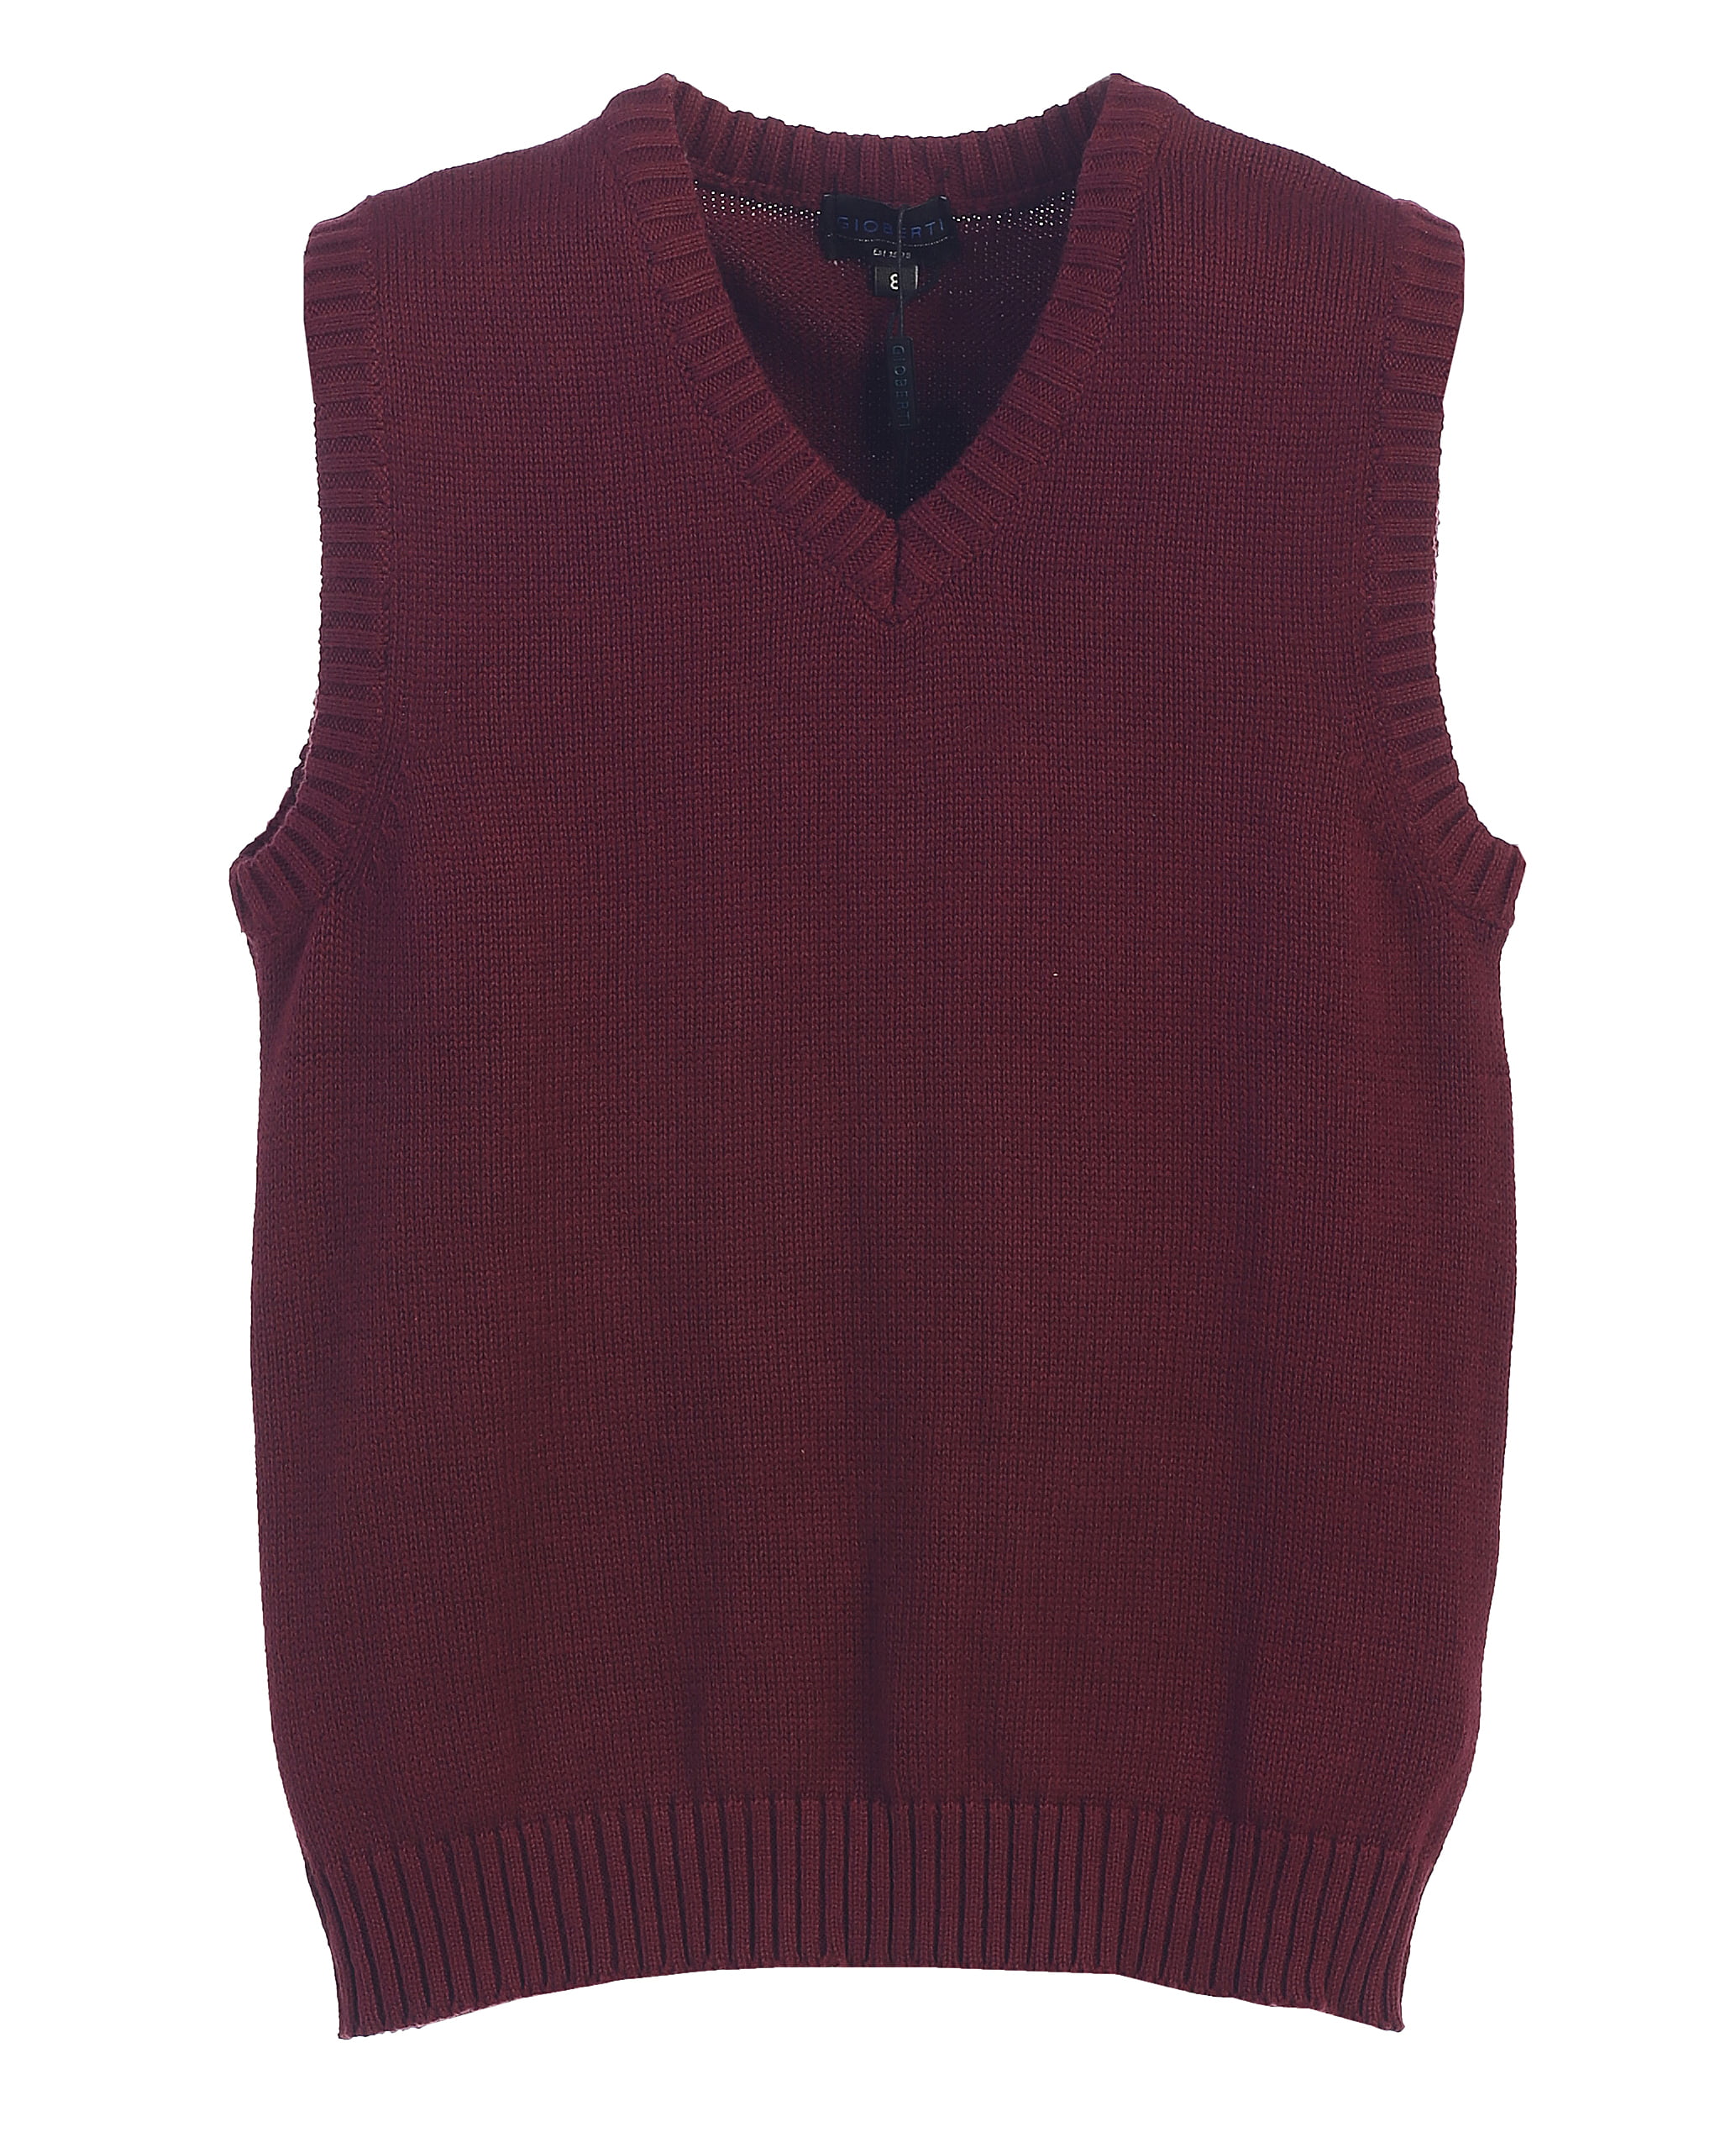 Gioberti Boy's V-Neck 100% Cotton Knitted Pullover Sweater Vest 